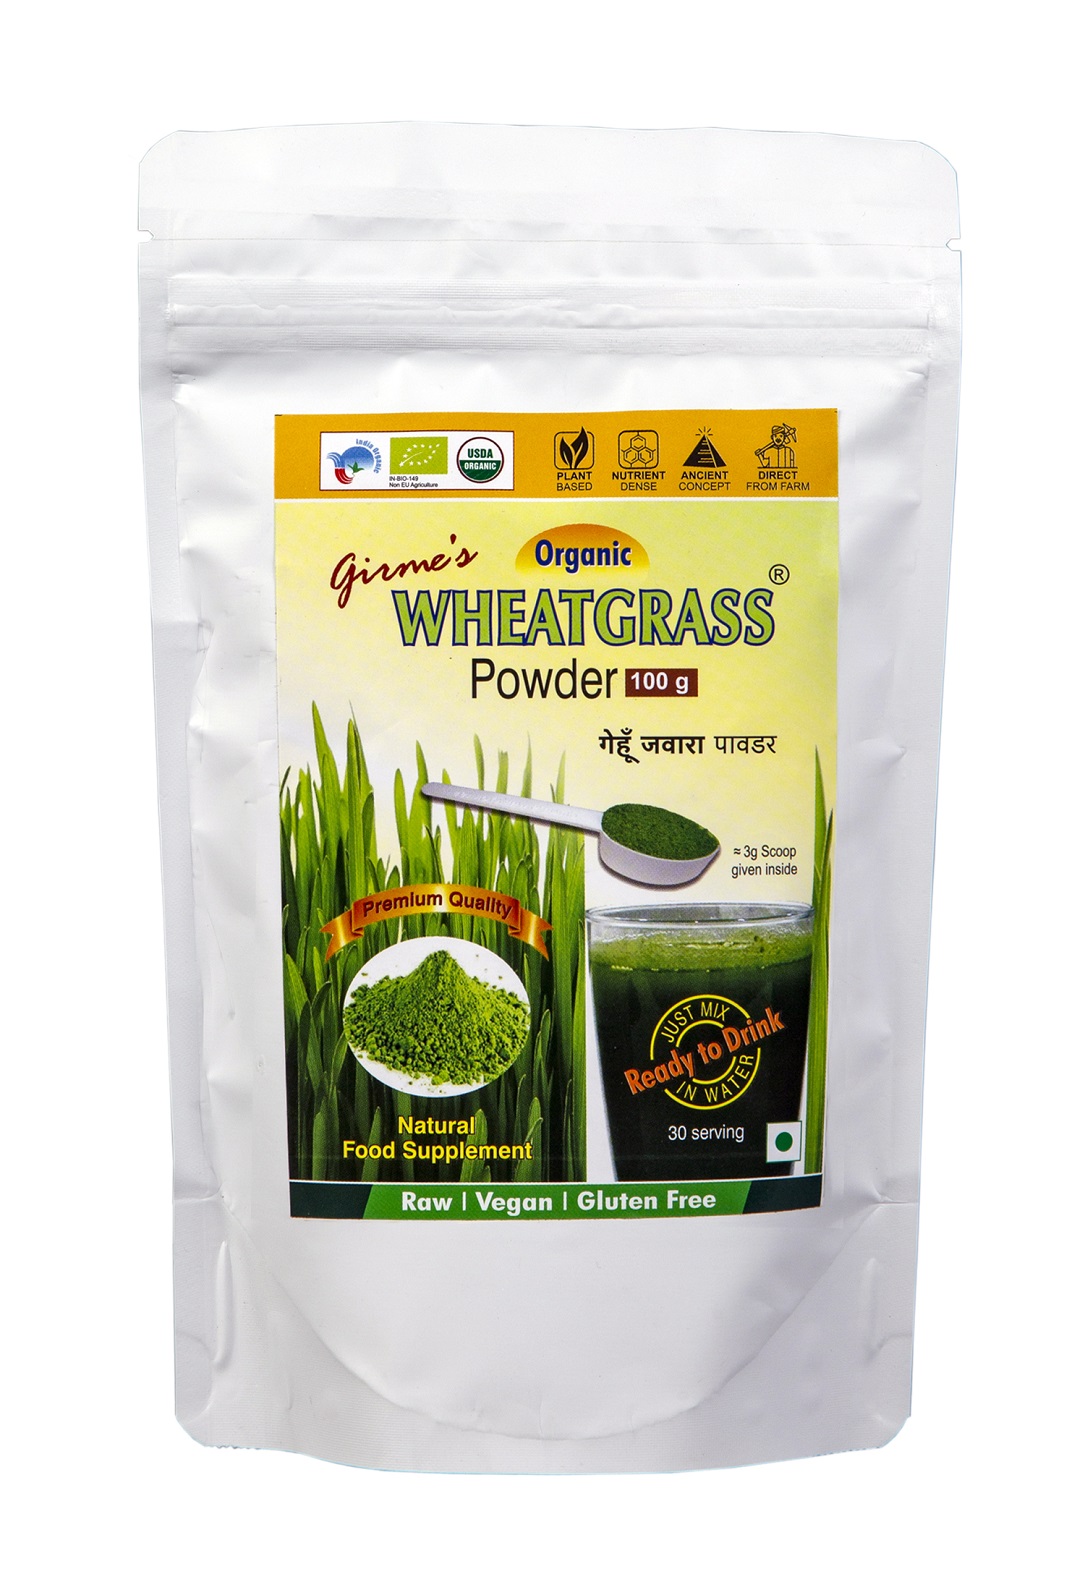 Wheatgrass Powder 100g Pouch pack